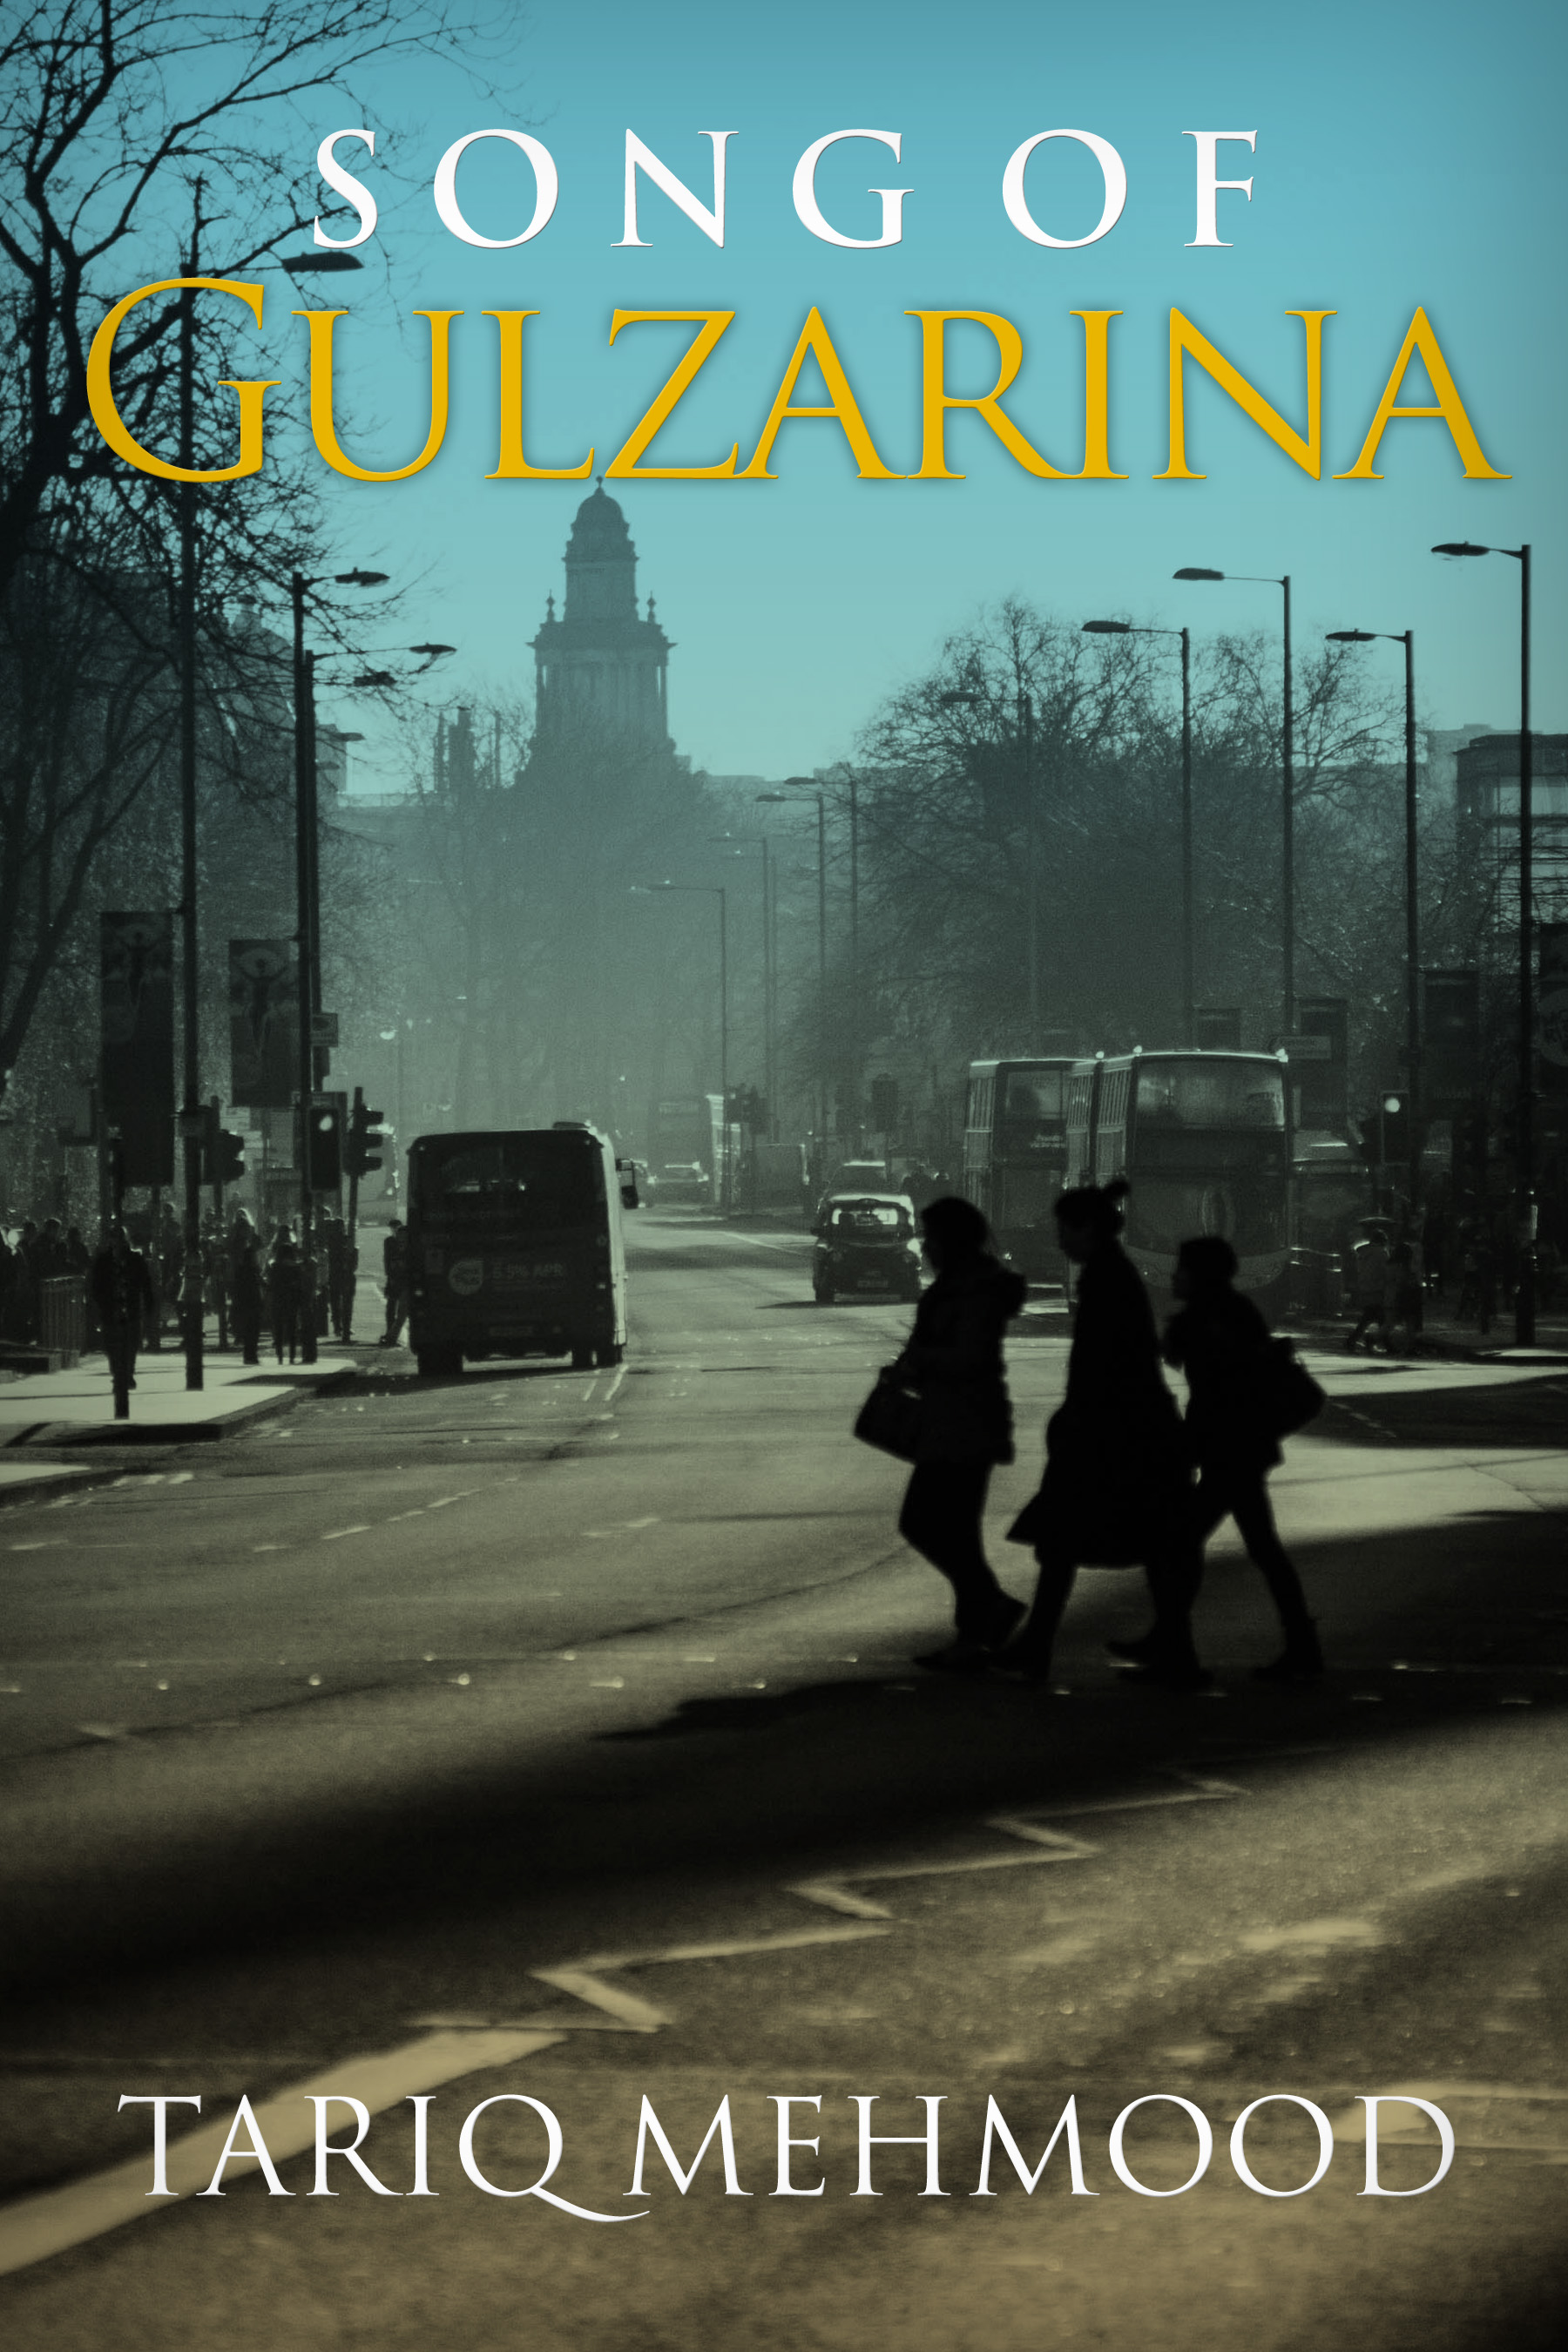 Cover of Tariq Mehmood's "Gulzarina" (published by Daraja Press)